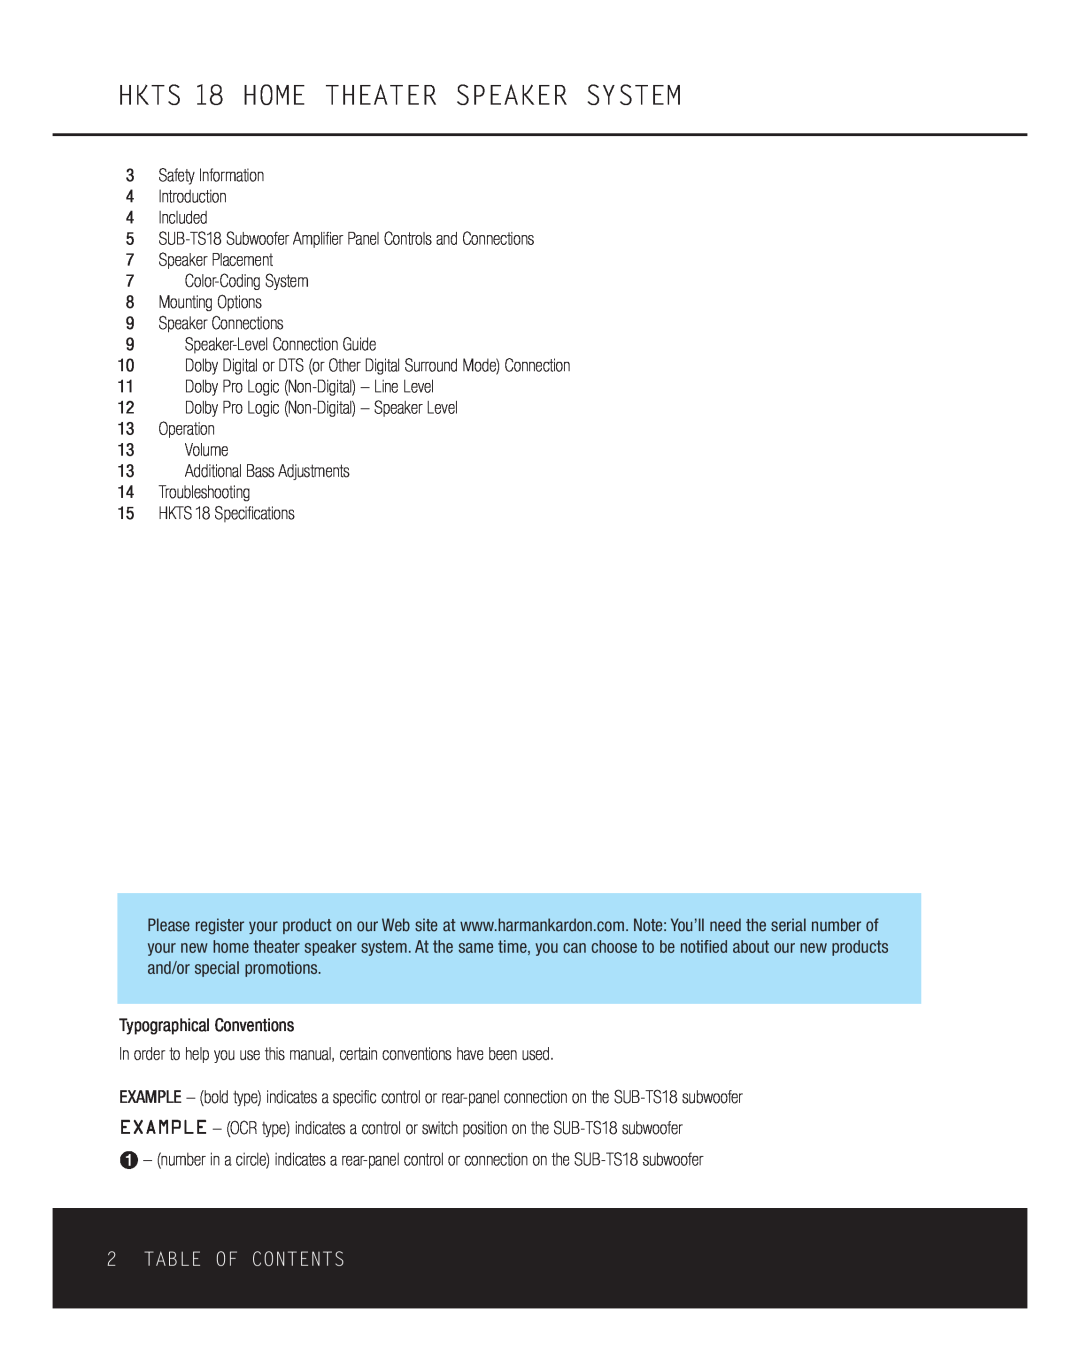 Harman-Kardon owner manual HKTS 18 HOME THEATER SPEAKER SYSTEM, Table Of Contents 